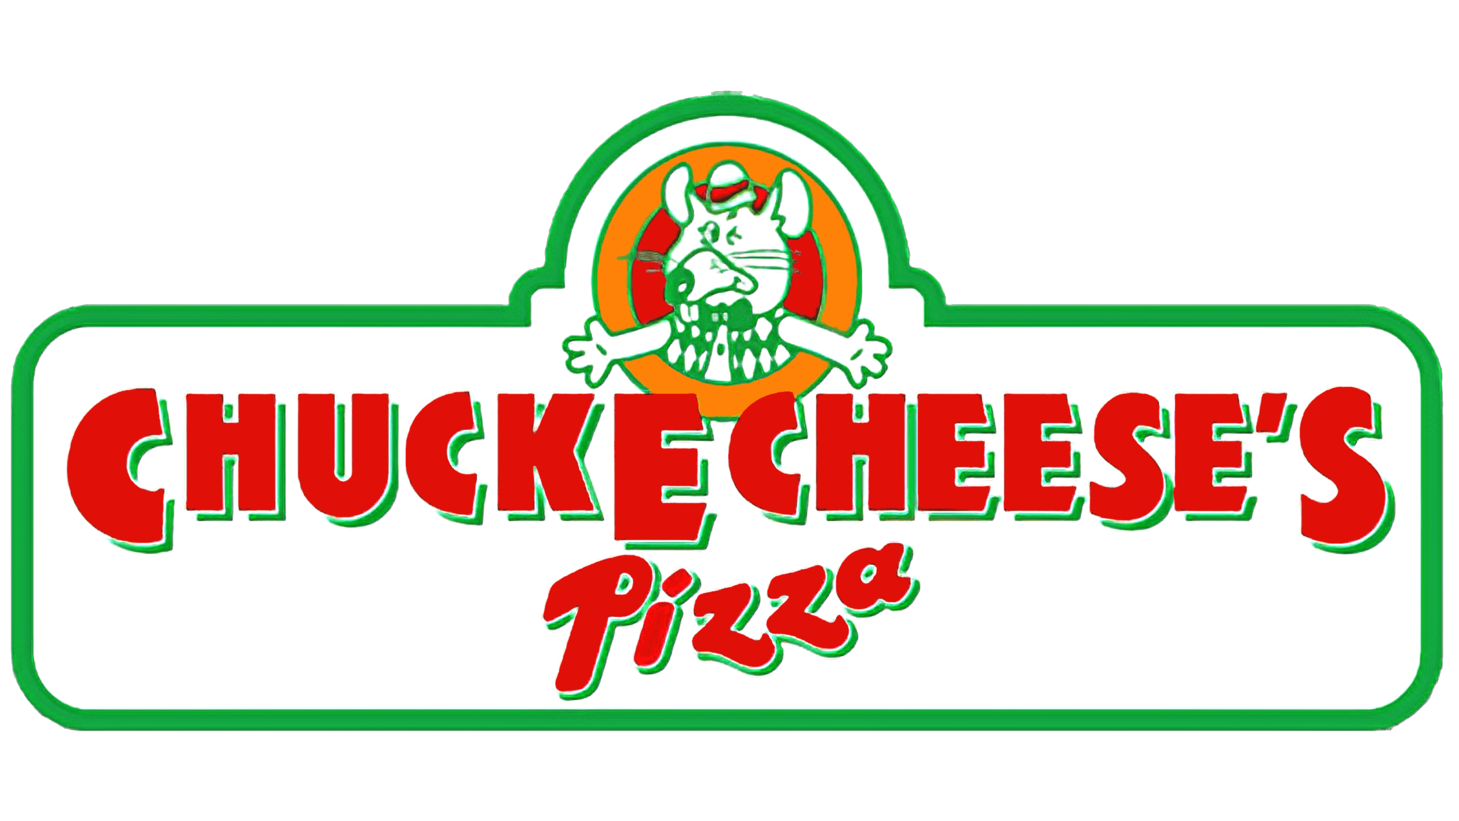 Chuck e. cheeses pizza sign 1989 1993